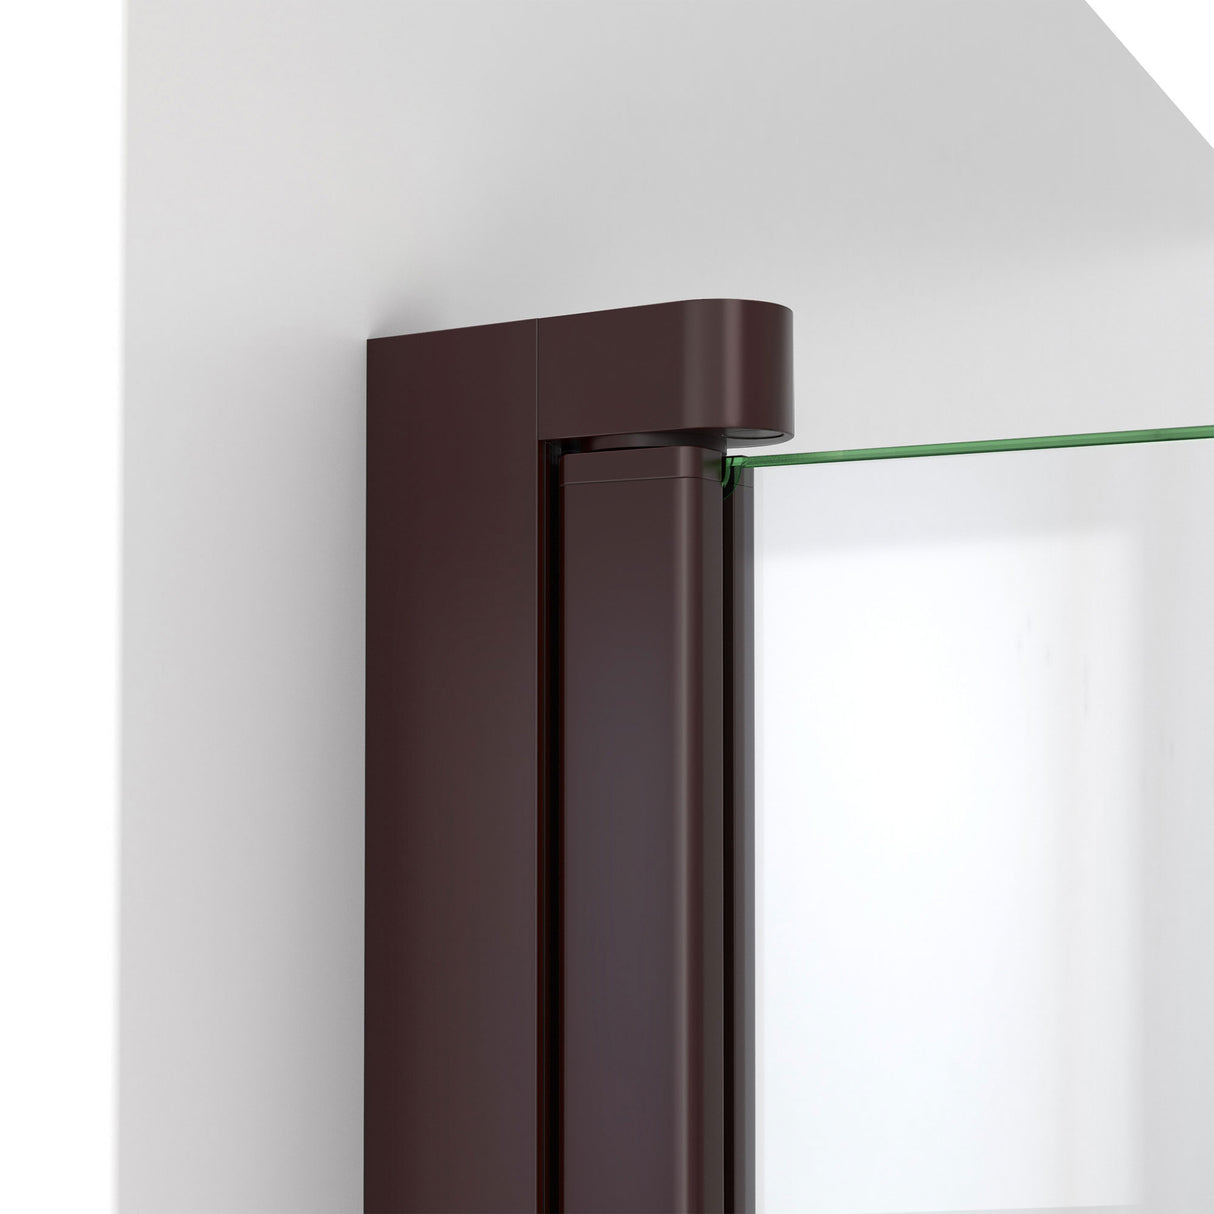 DreamLine Aqua-Q Fold 36 in. D x 36 in. W x 76 3/4 in. H Frameless Bi-Fold Shower Door in Oil Rubbed Bronze with Biscuit Kit